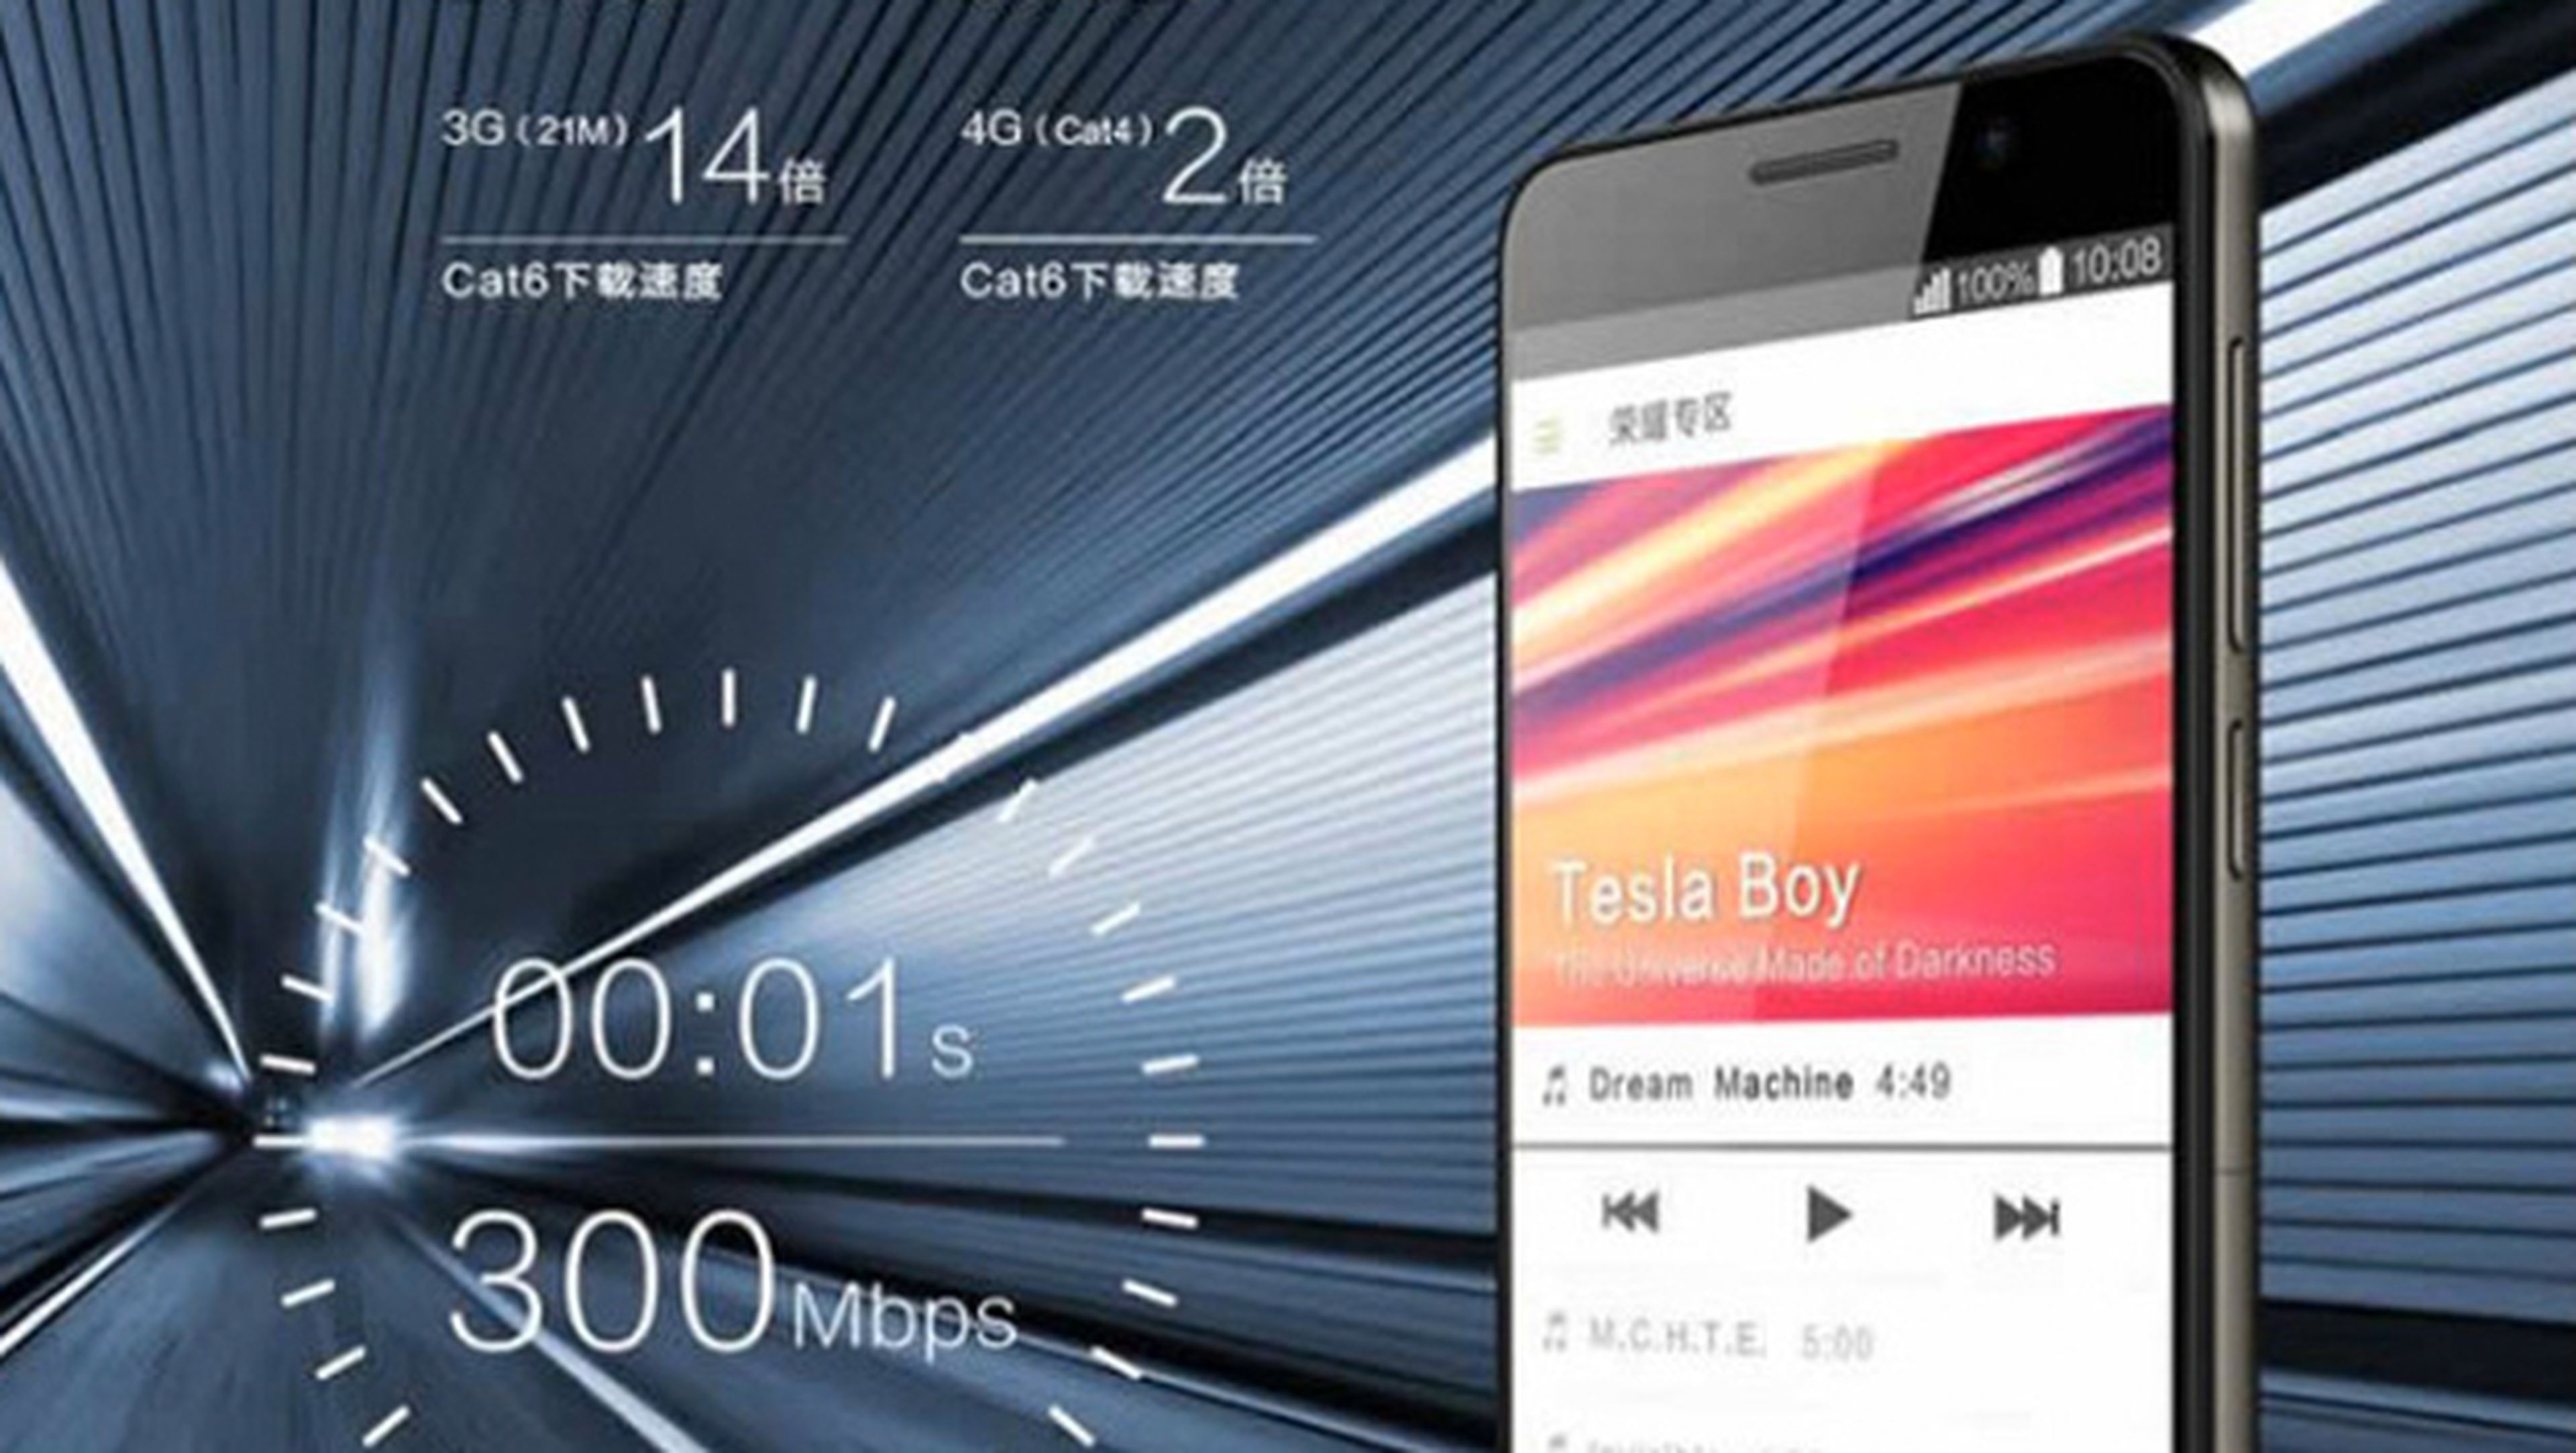 Huawei Honor 6, el móvil que ya bate récords en China